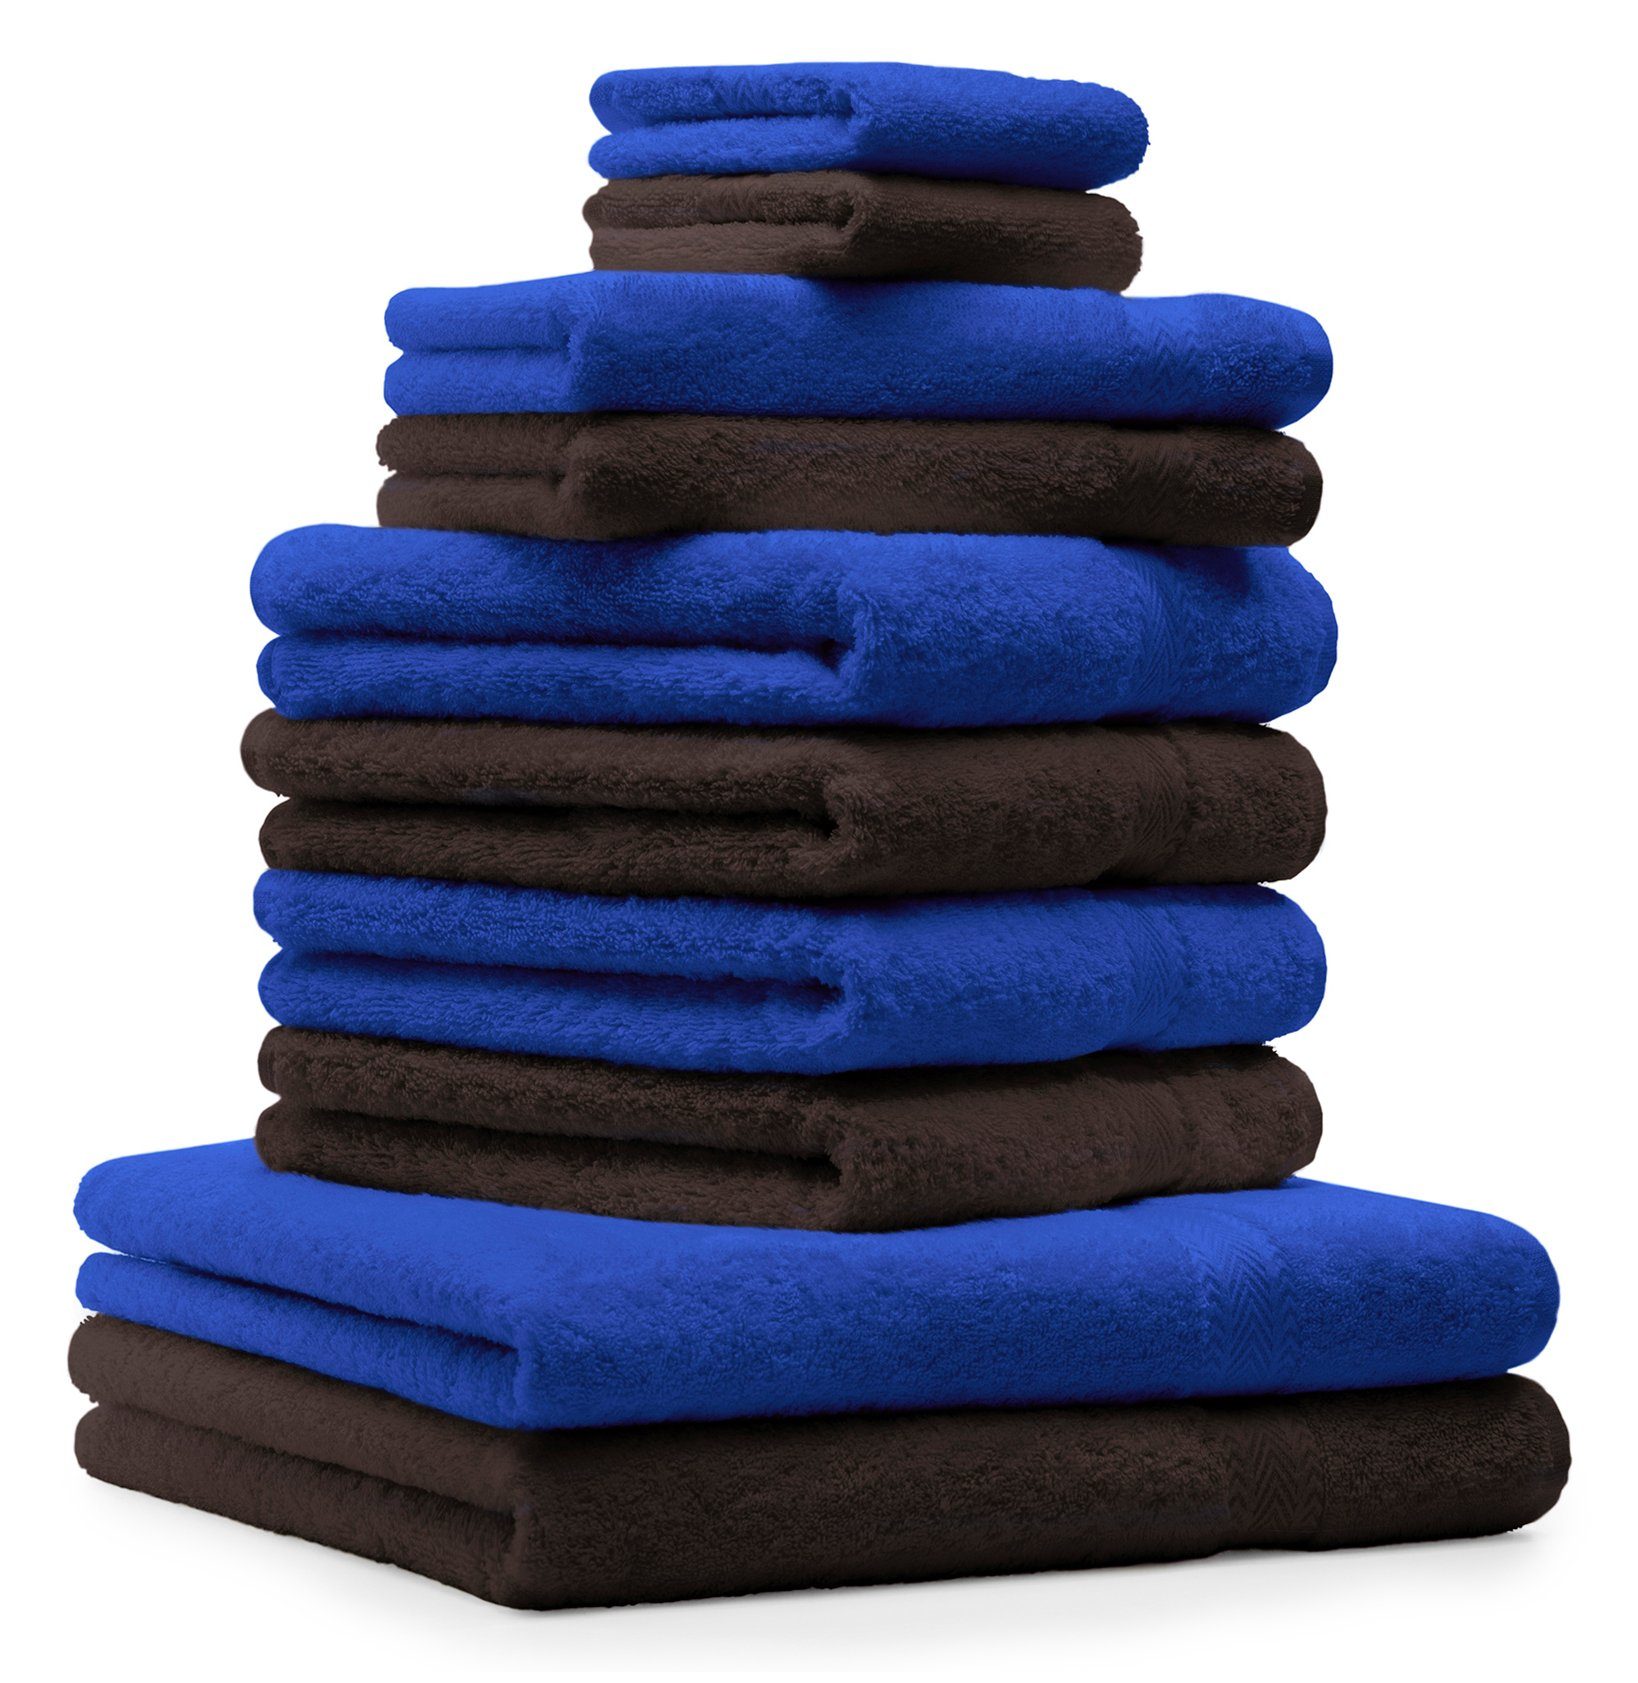 Betz Handtuch Set 10-TLG. Blau Duschtücher 4 Dunkel Handtücher Handtuch-Set Braun, (10-tlg) Baumwolle 100% 2 & Royal Premium 100% Baumwolle, 2 Gästetücher Farbe Waschhandschuhe 2